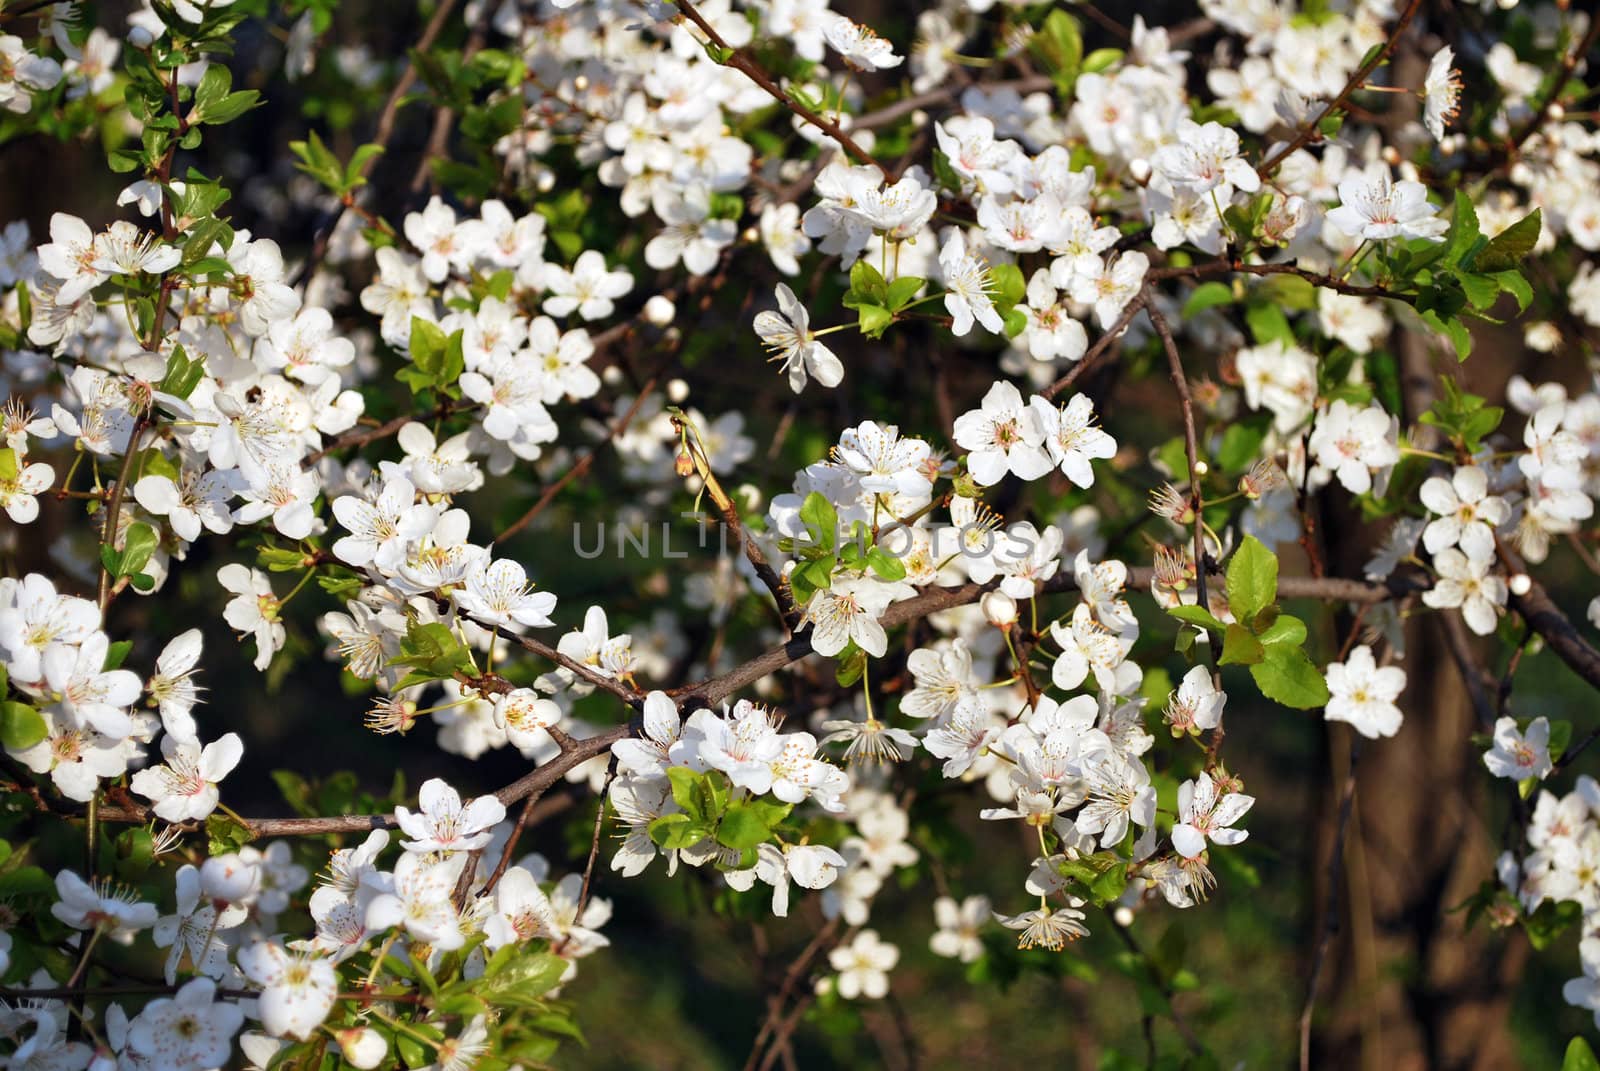 White Flower On Tree by tony4urban